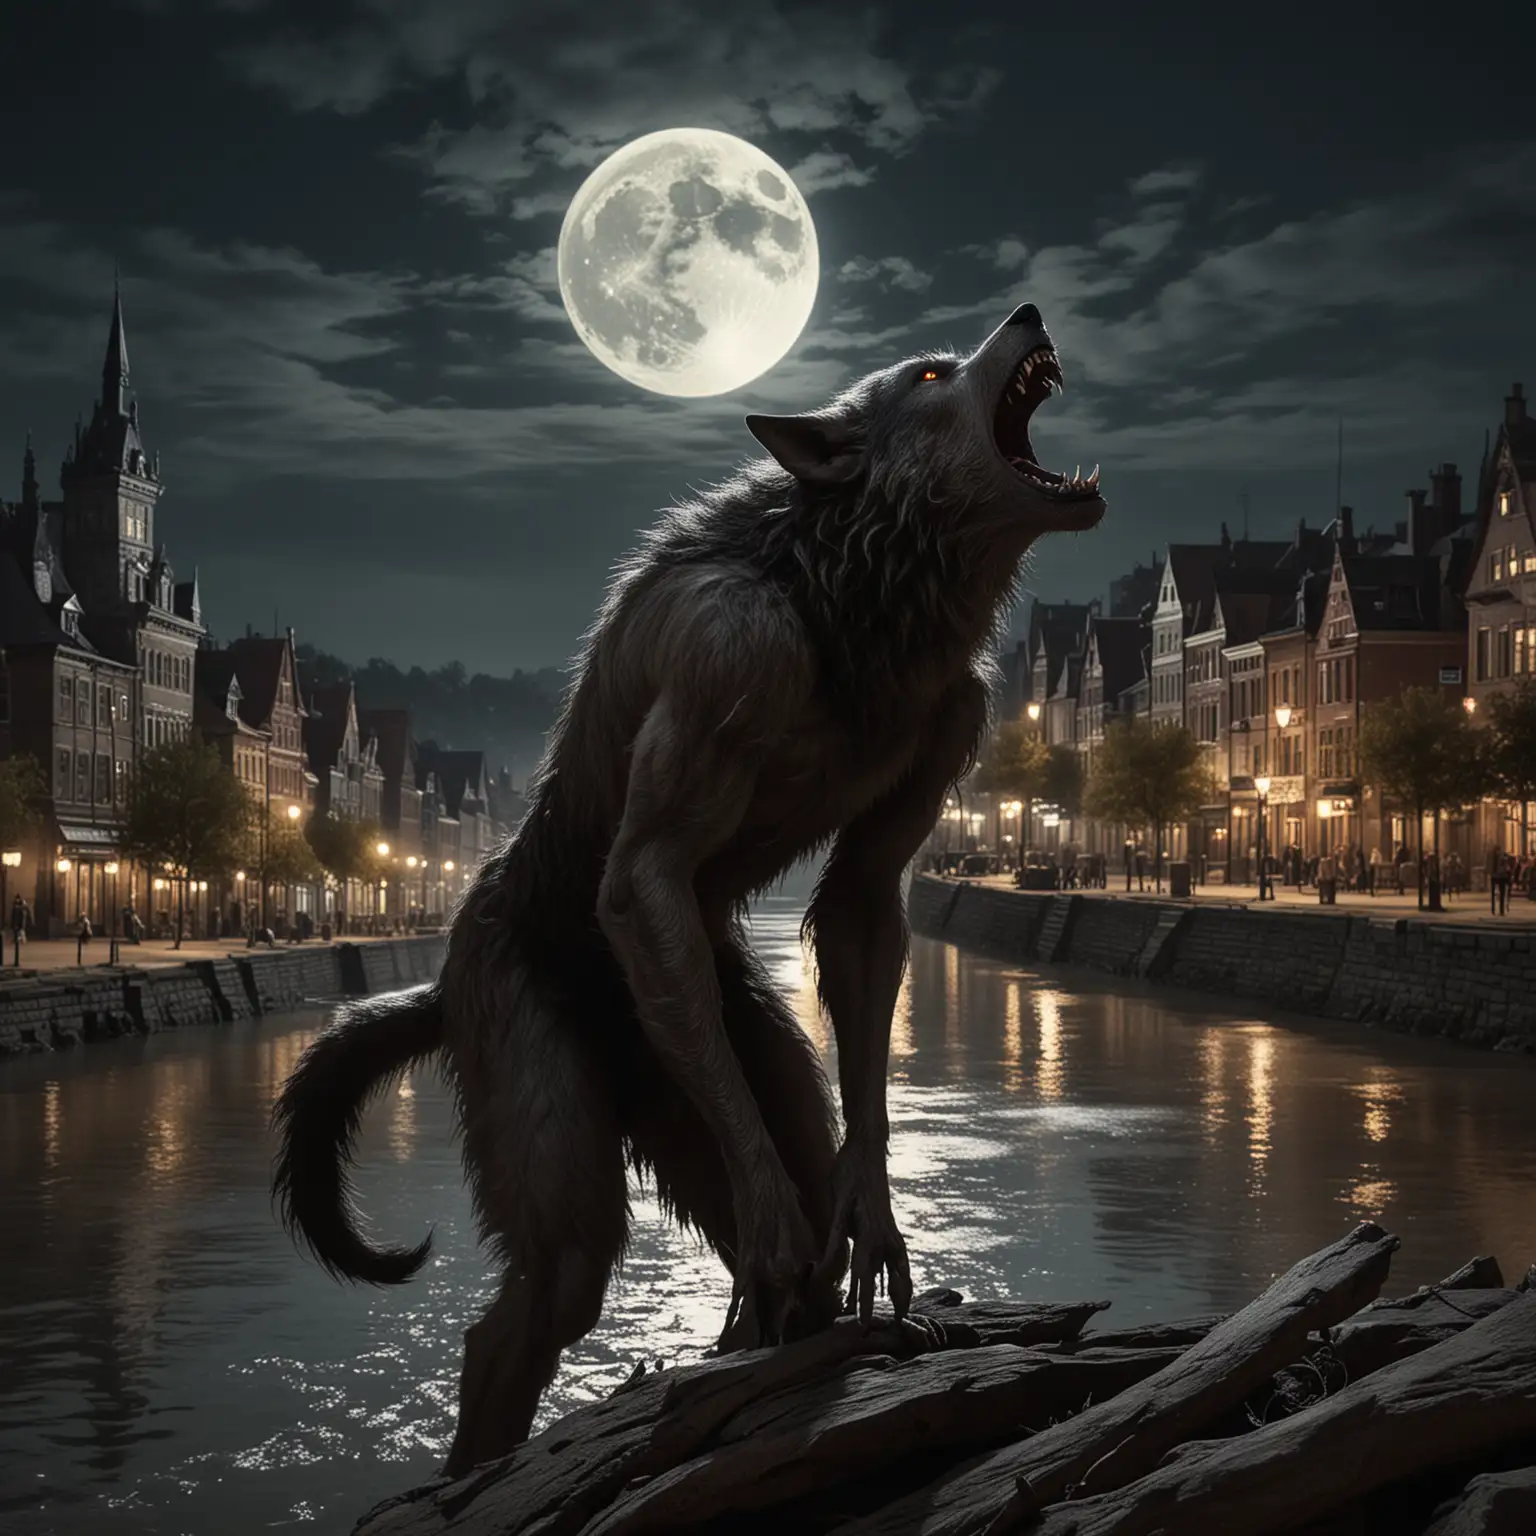 Werewolf Howling at Moon in Urban Riverside Setting